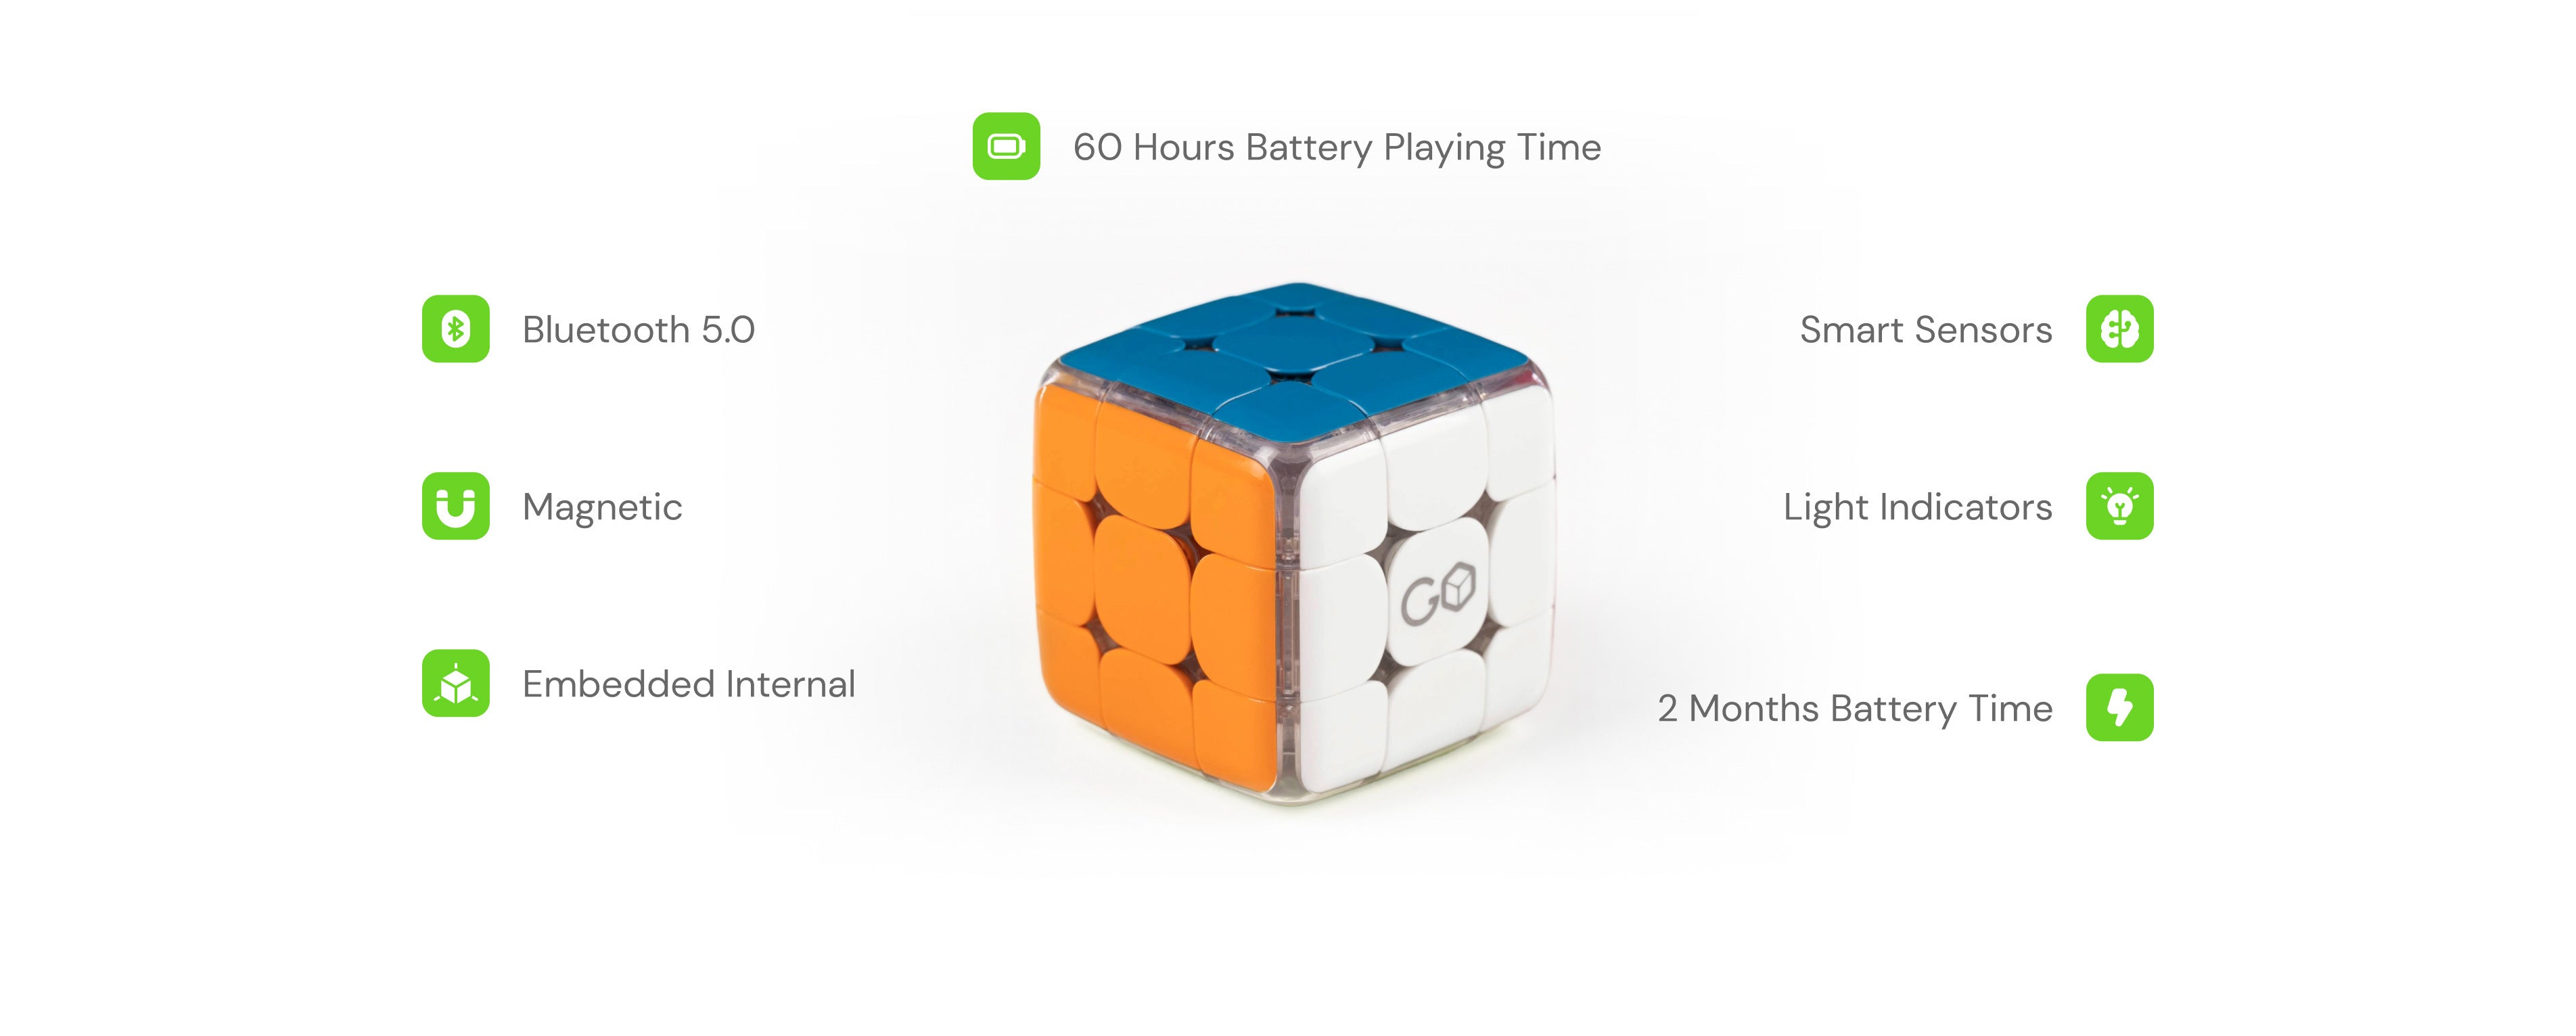 smart rubik's cube 3x3 benefits